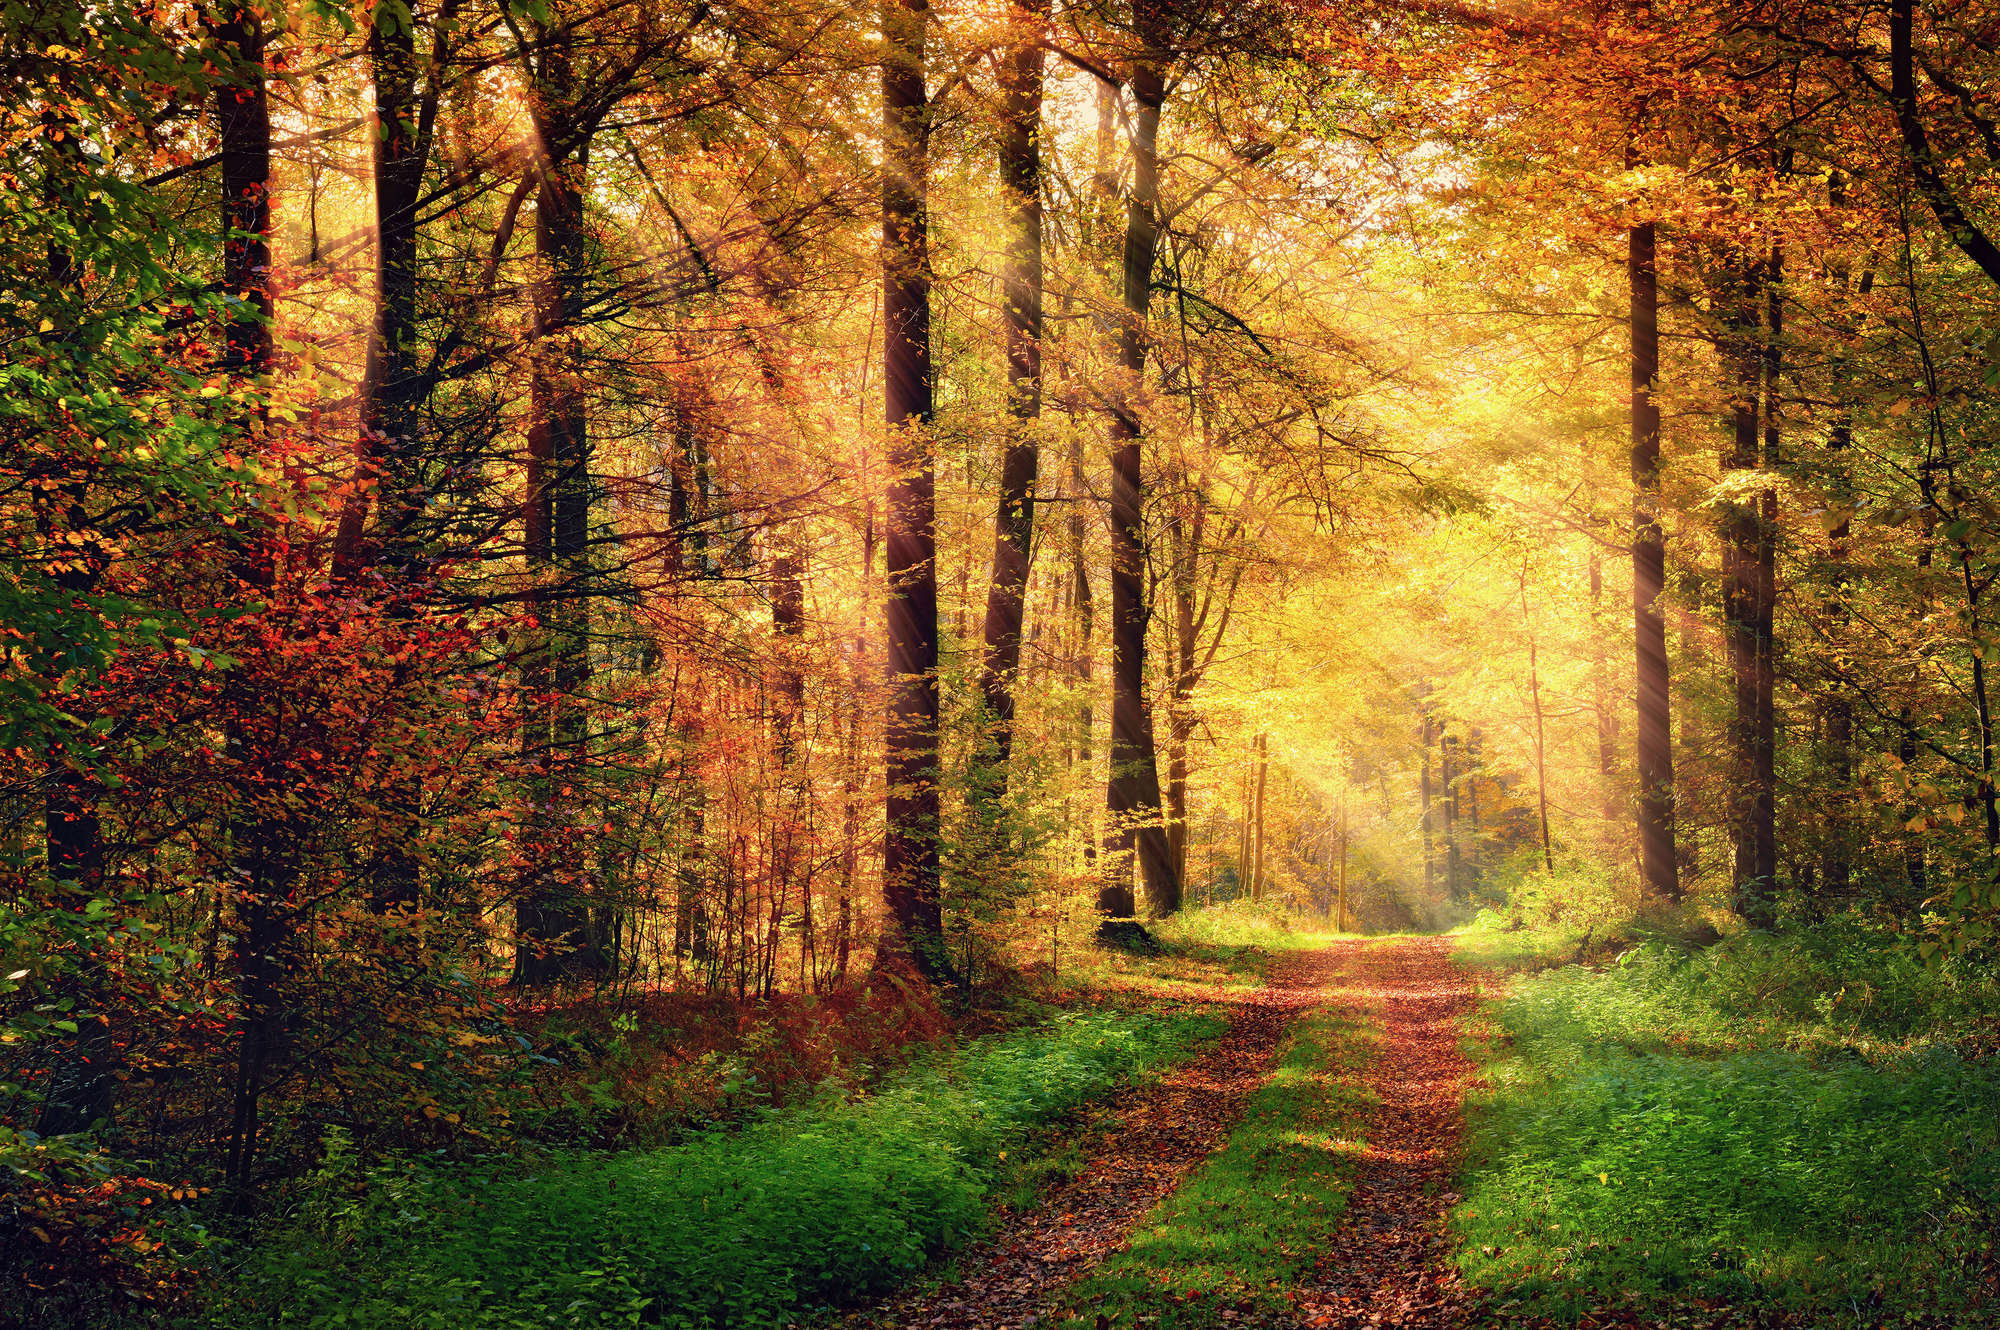             Papel pintado Naturaleza Camino del bosque en otoño sobre tejido no tejido liso mate
        